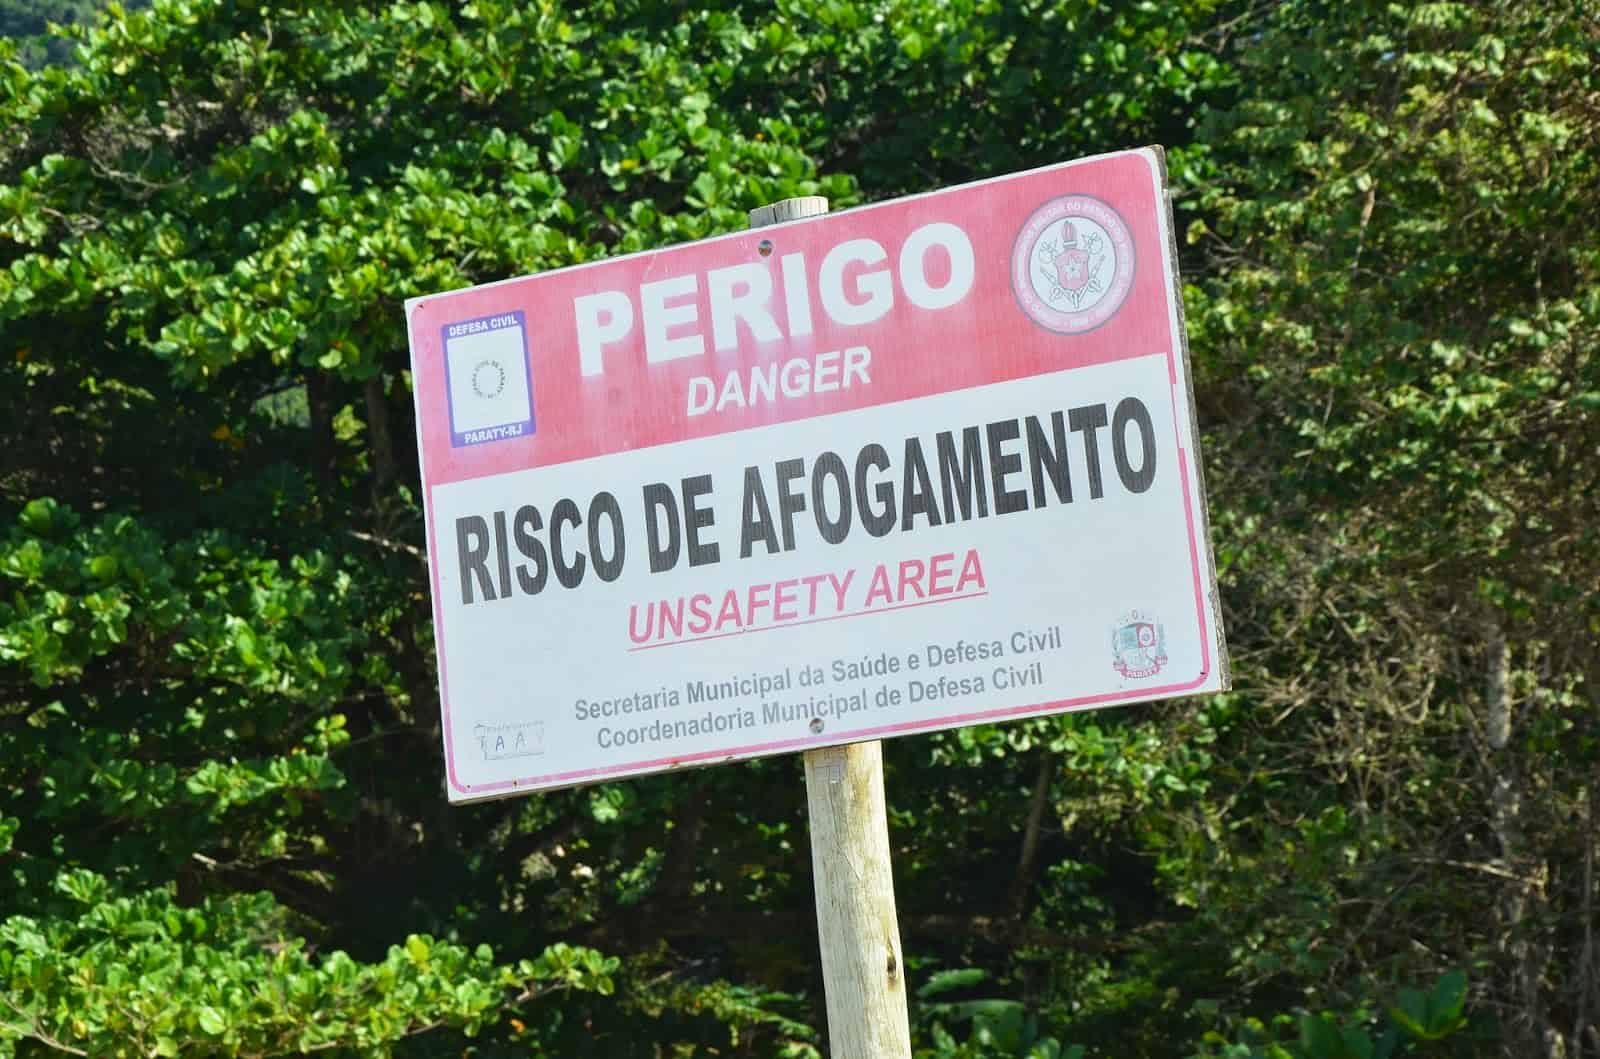 Unsafety Area!, Trindade, Brazil